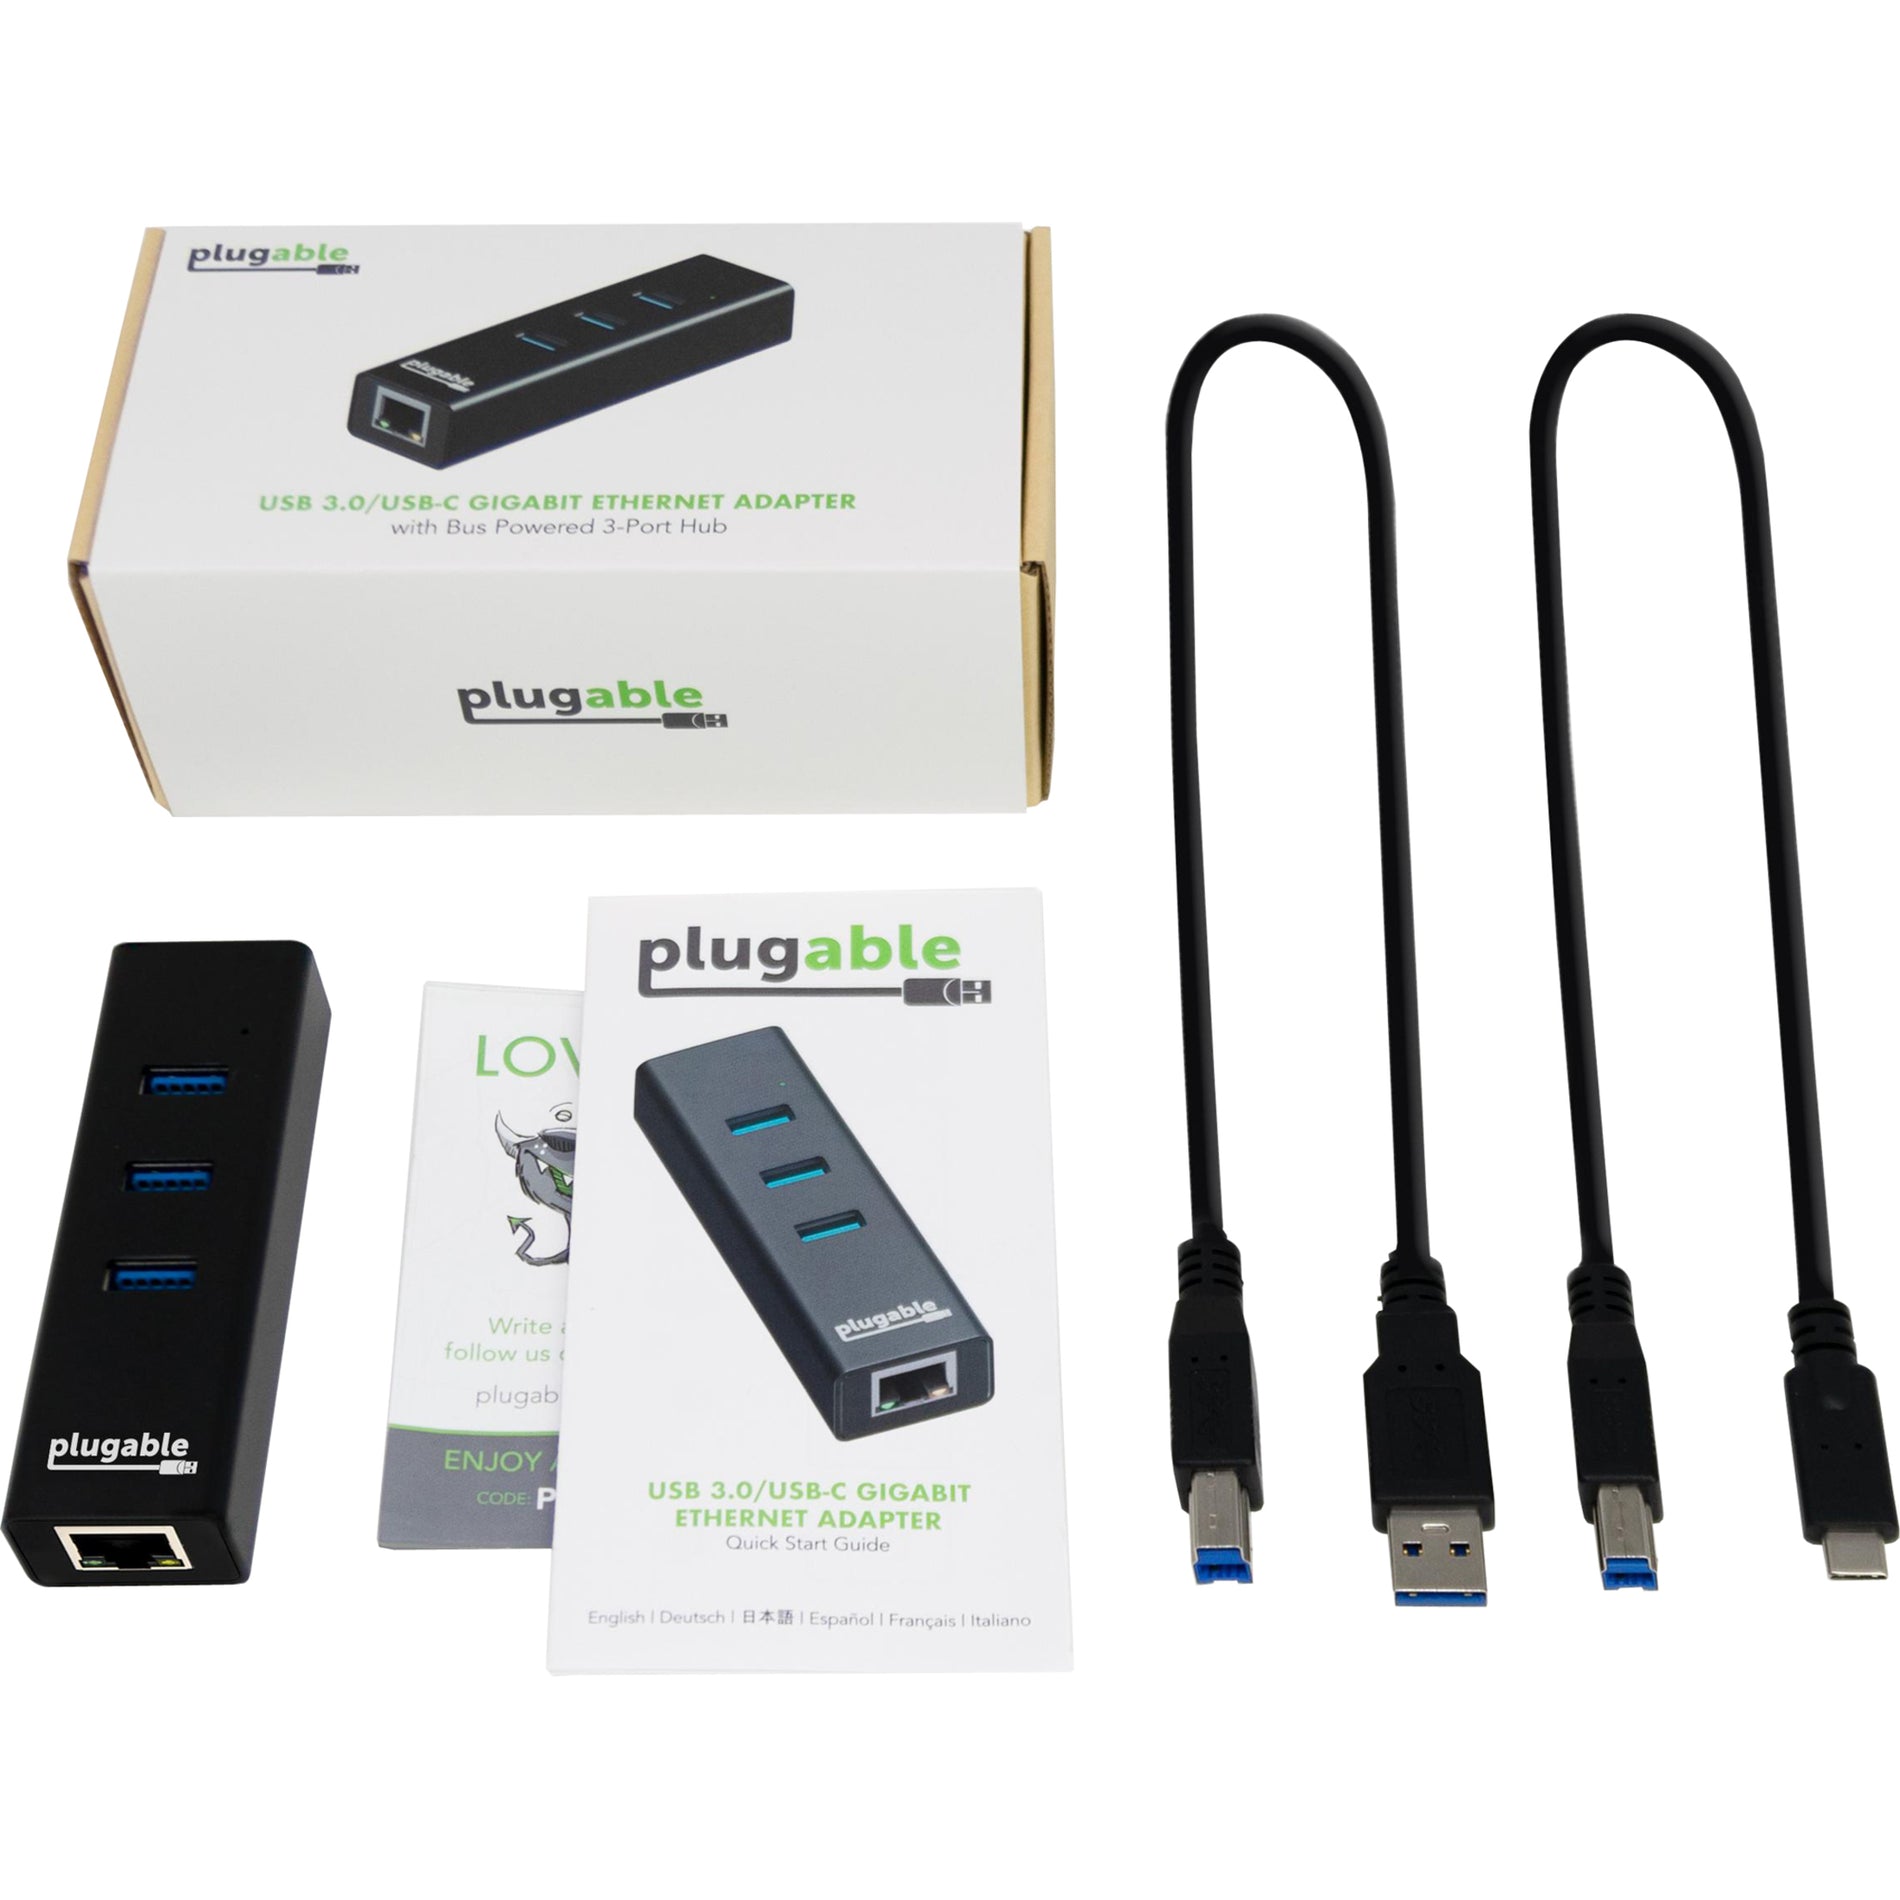 Plugable USB3-HUB3ME USB 3.0 GIGABIT ETHERNET ADAPTER 3 Port USB Hub with Ethernet